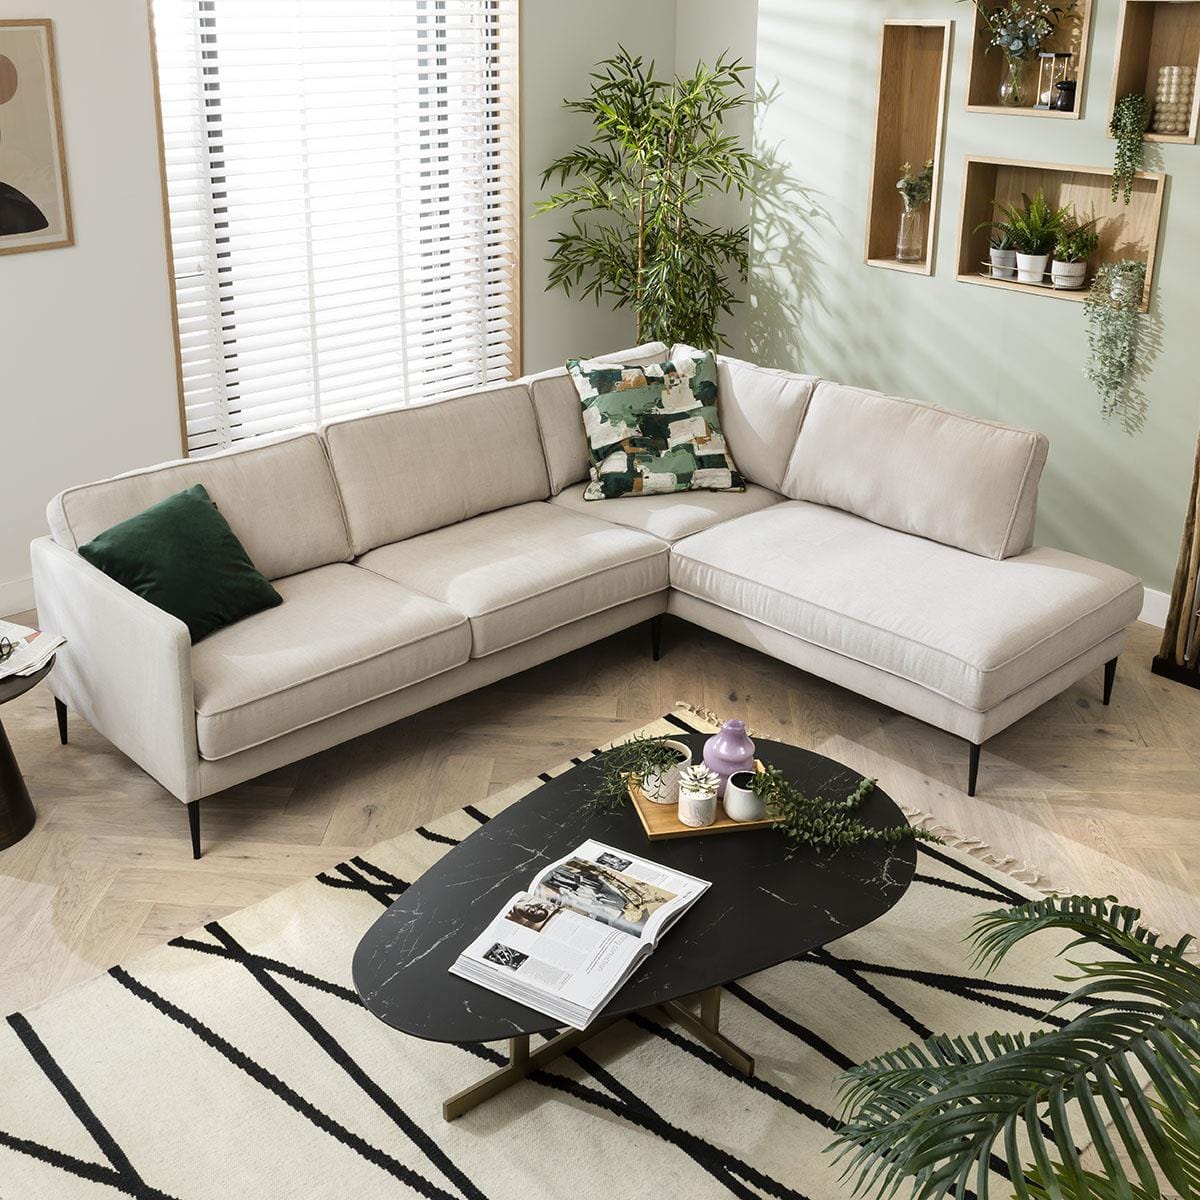 Quatropi Quatropi 4 Seater Corner Sofa - Modern L-Shape Design - Choose Your Fabric - 256x200cm